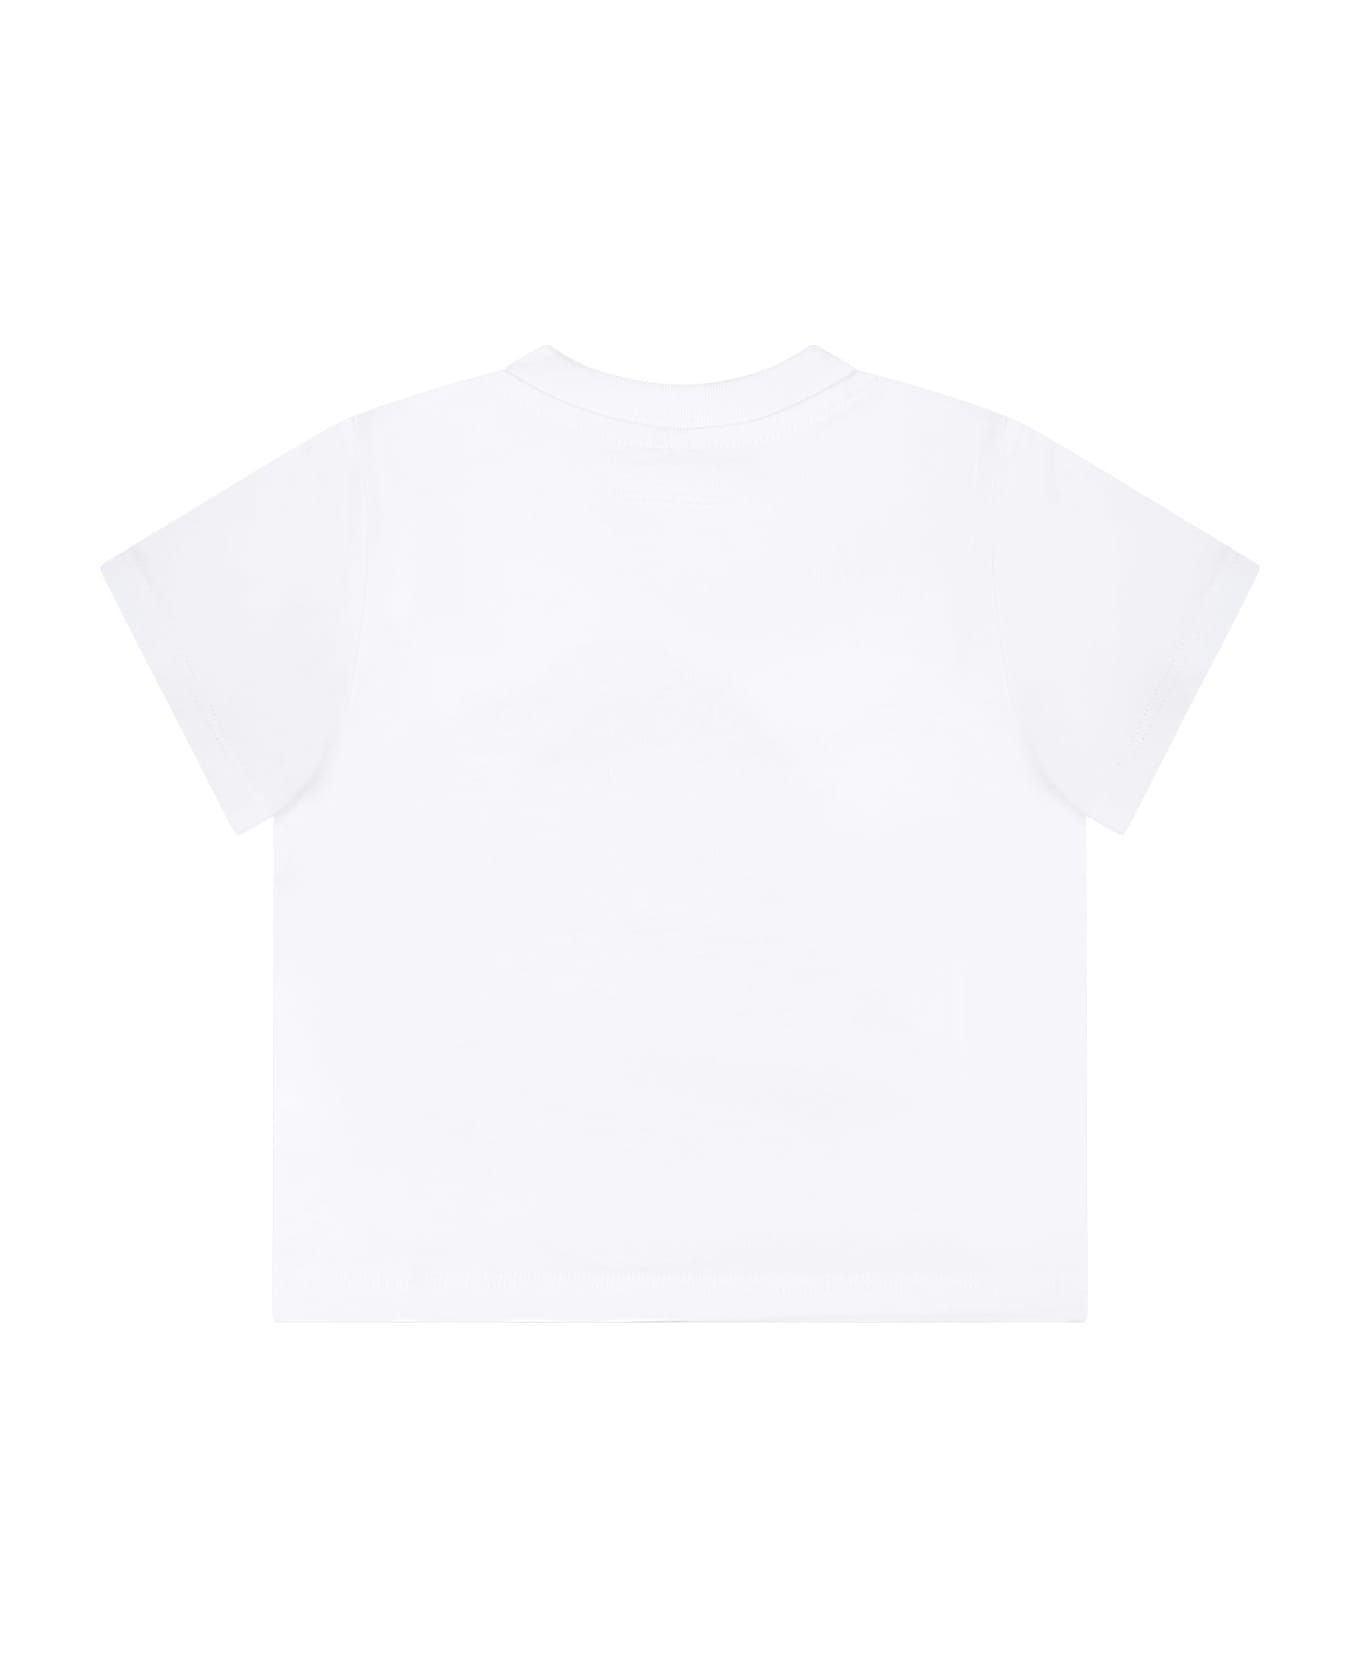 Stella McCartney Kids White T-shirt For Baby Boy With Shark Print - White